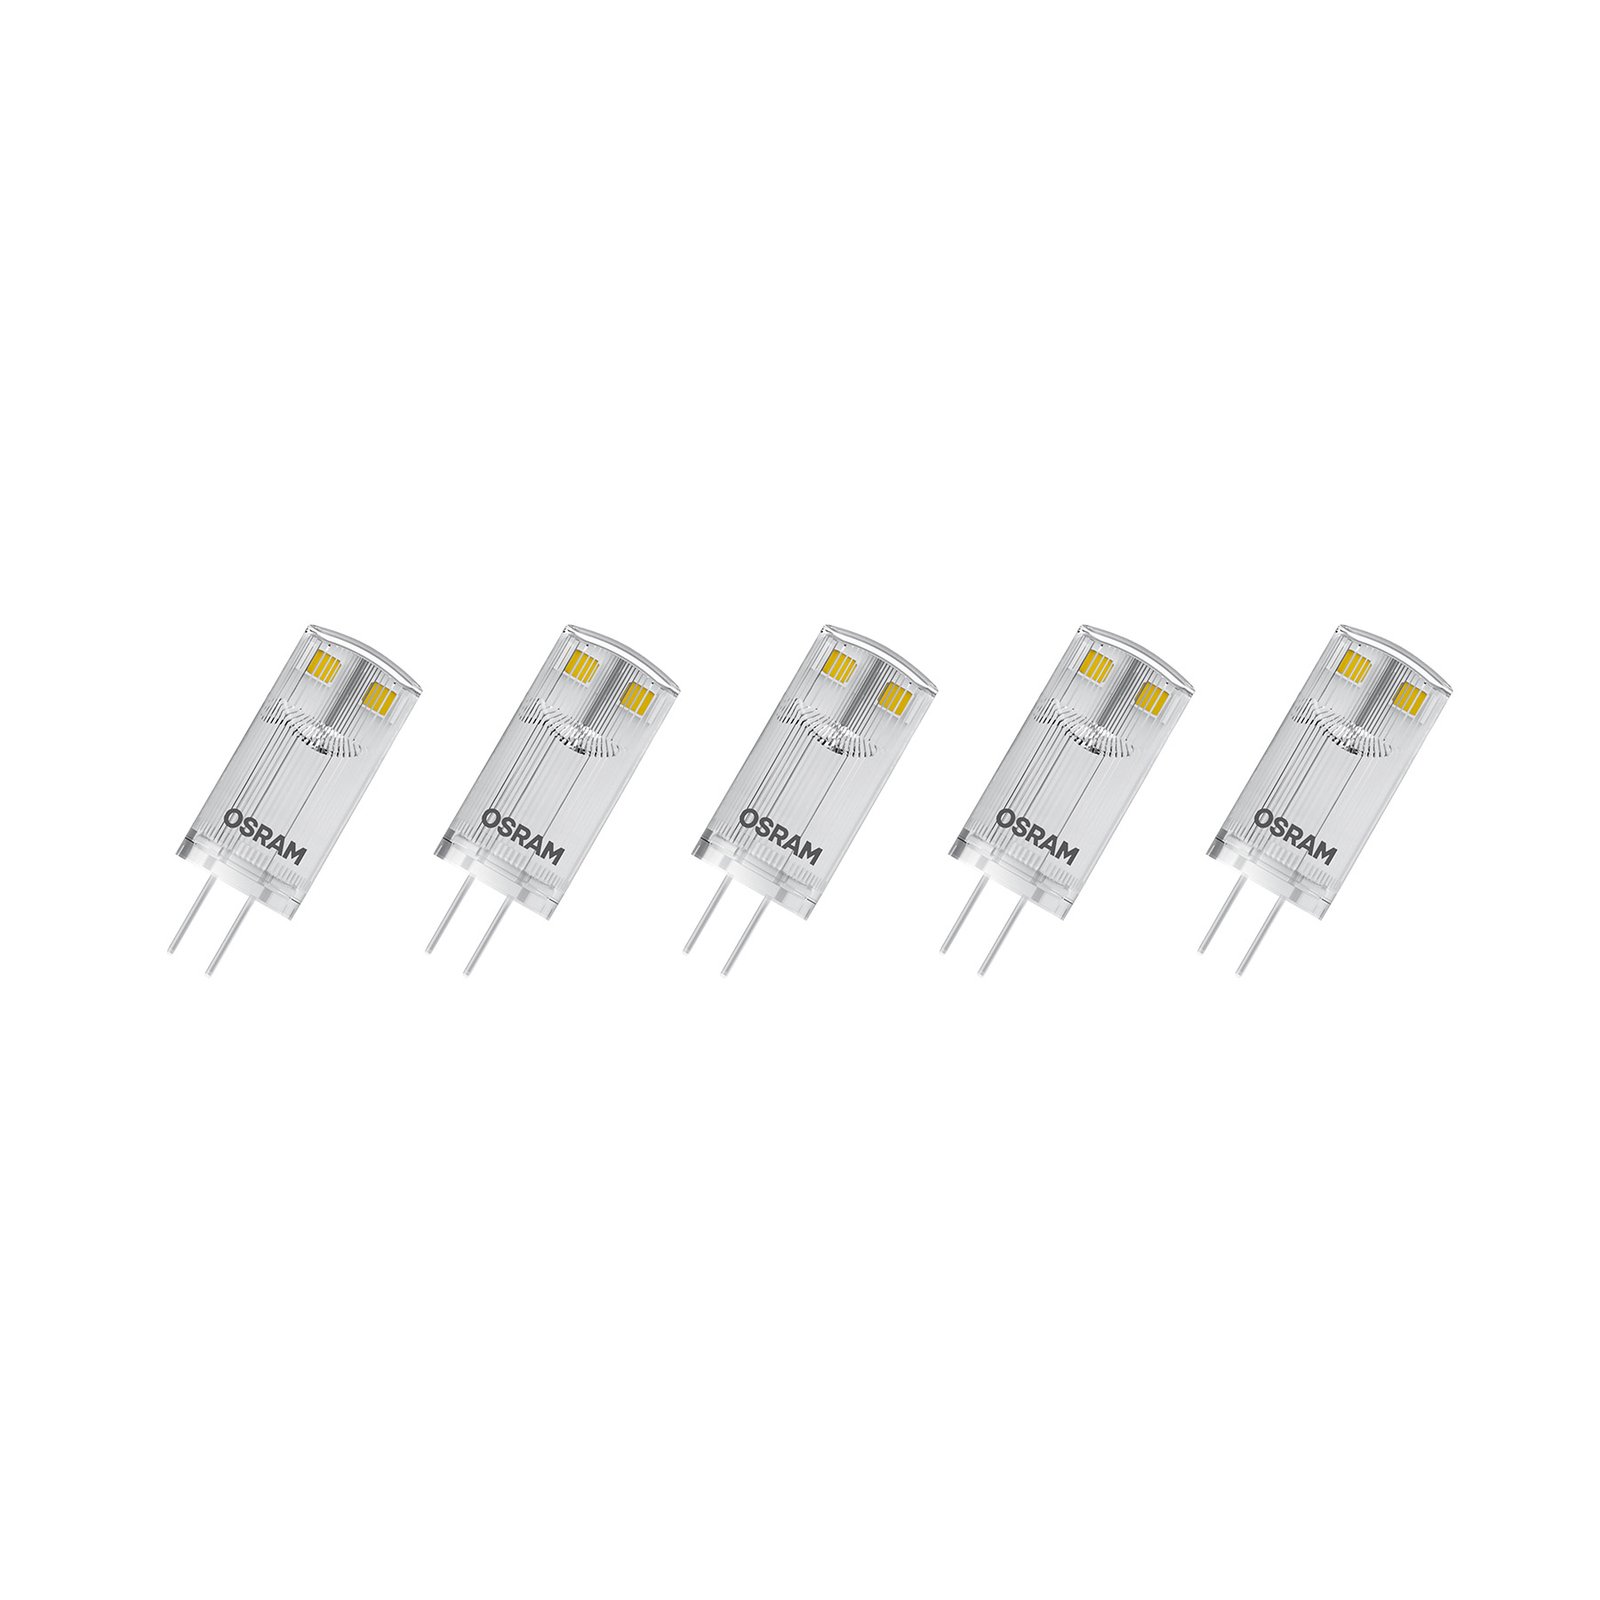 OSRAM Base PIN LED stiftlamp G4 0,9W 100lm per 5